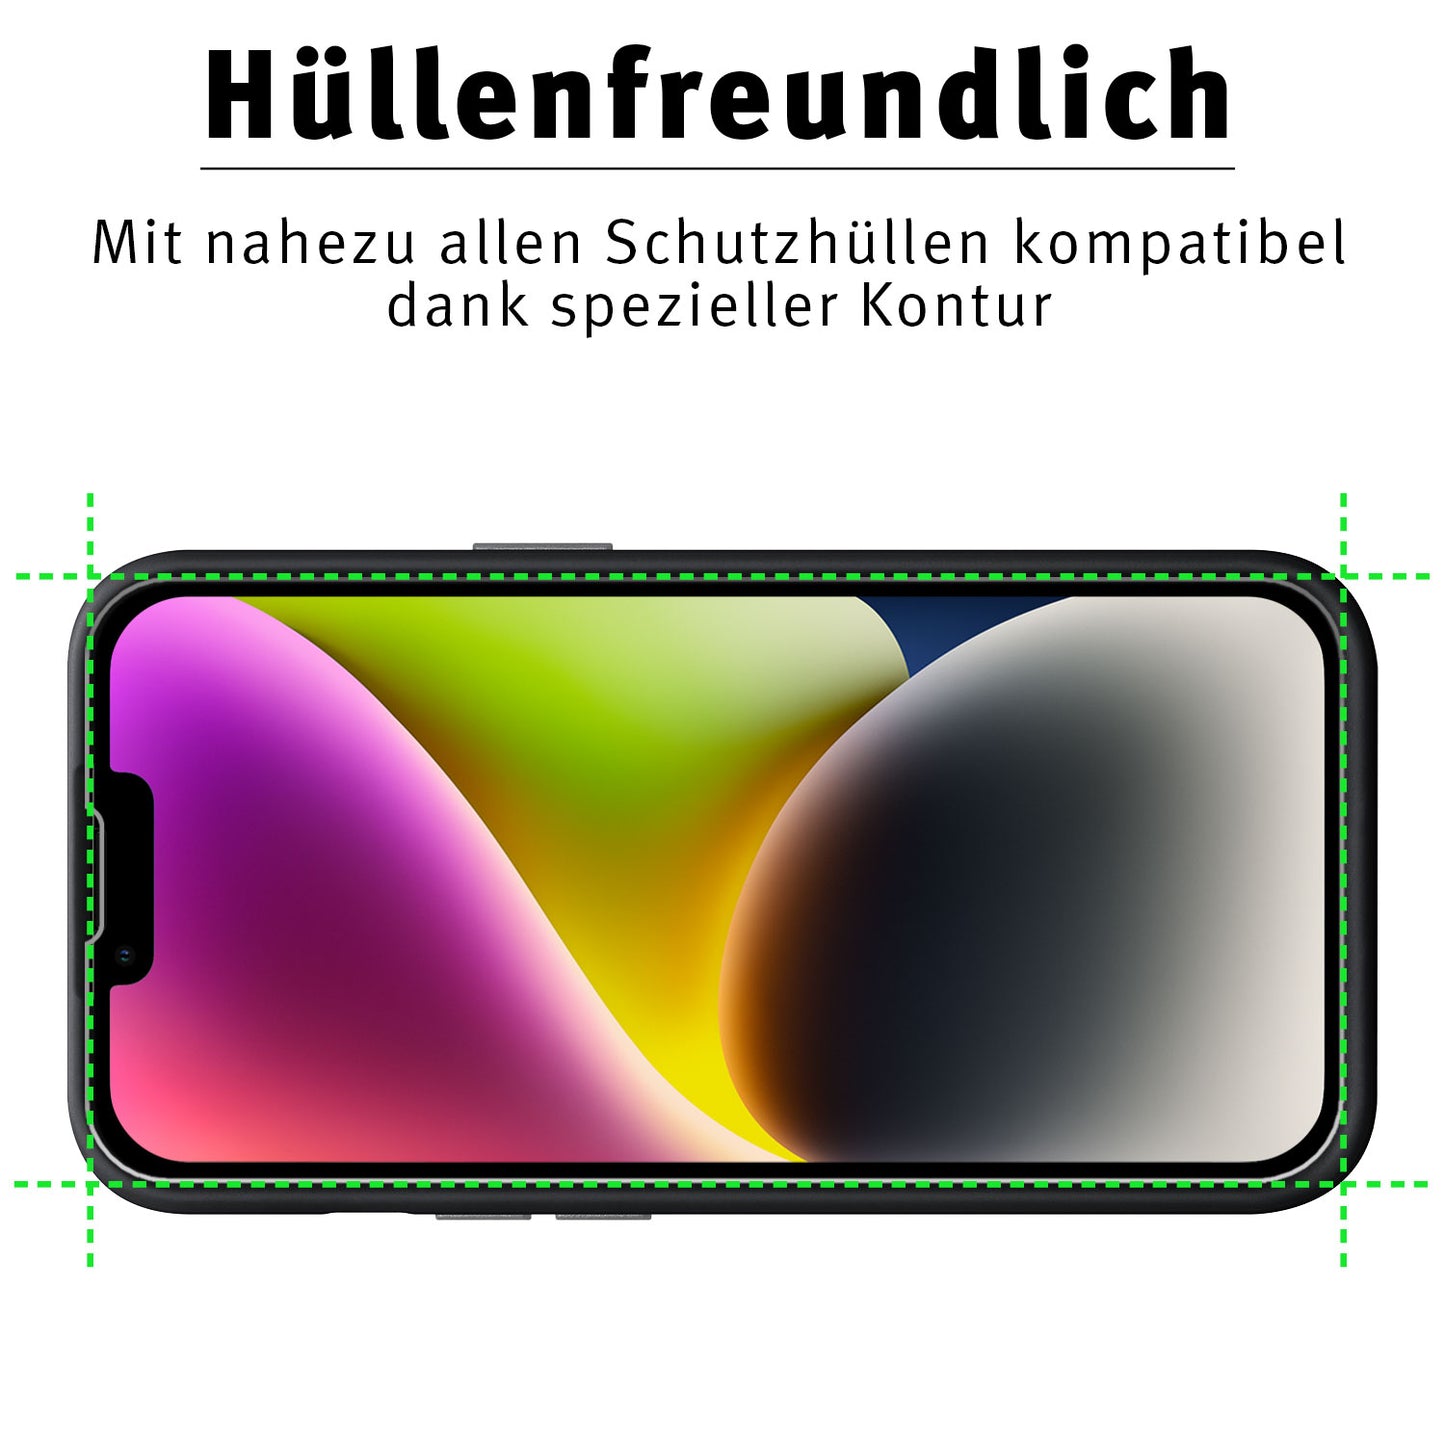 ArktisPRO iPhone 14 Plus Displayschutz GLAS - 2er Set